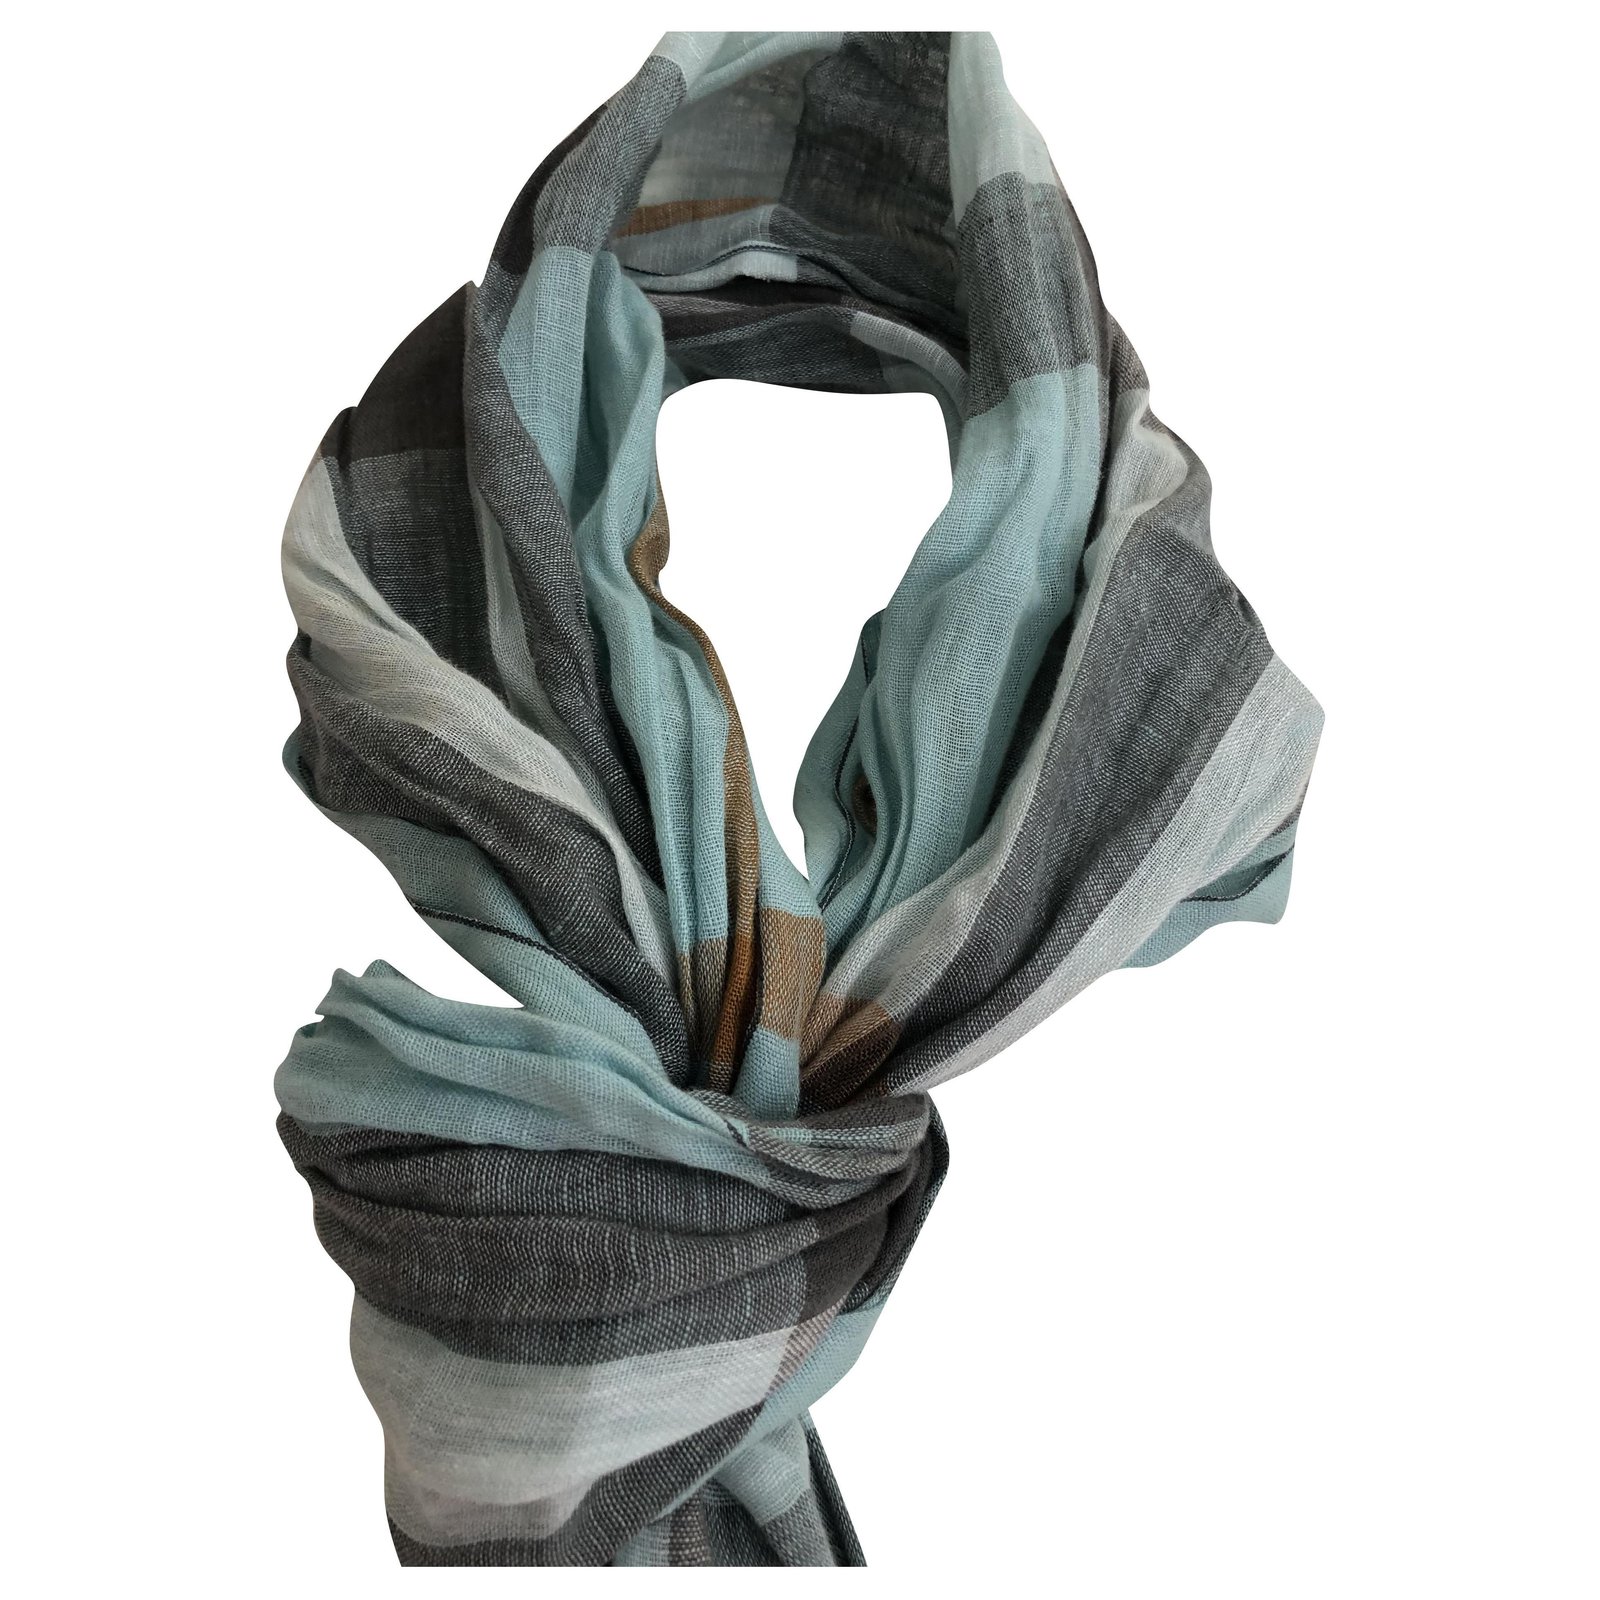 burberry grey check scarf